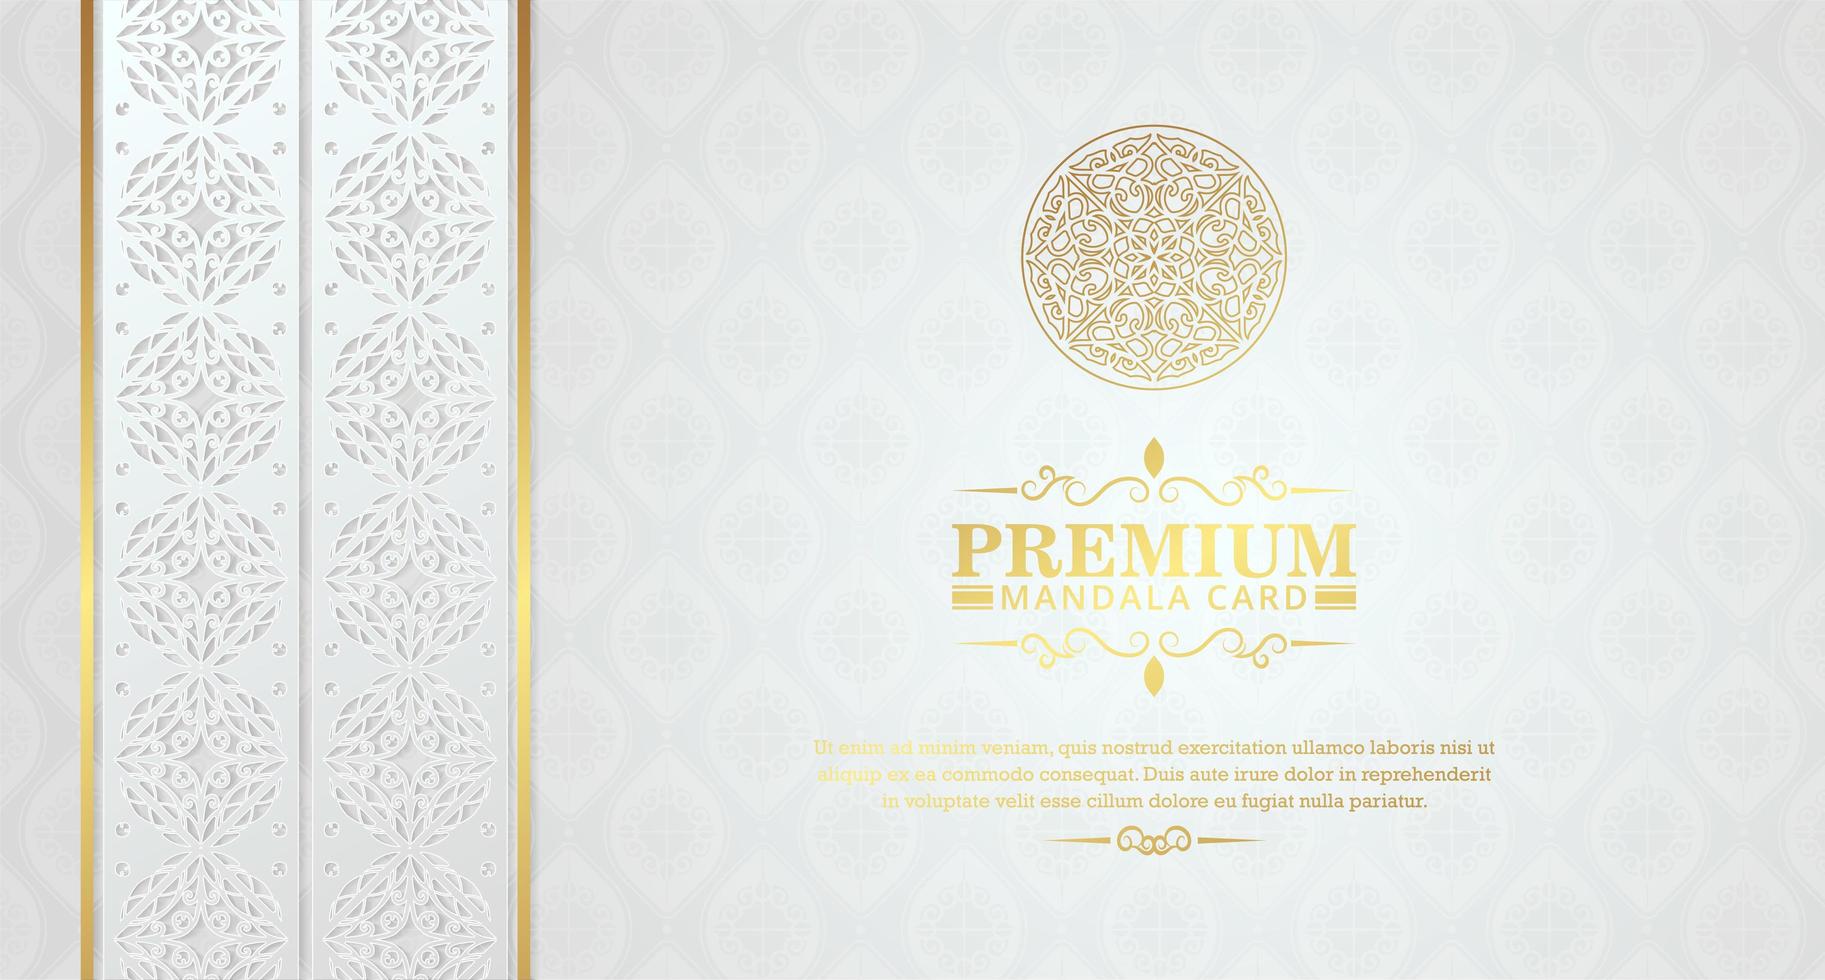 Luxurious white mandala background with decorative frames vector